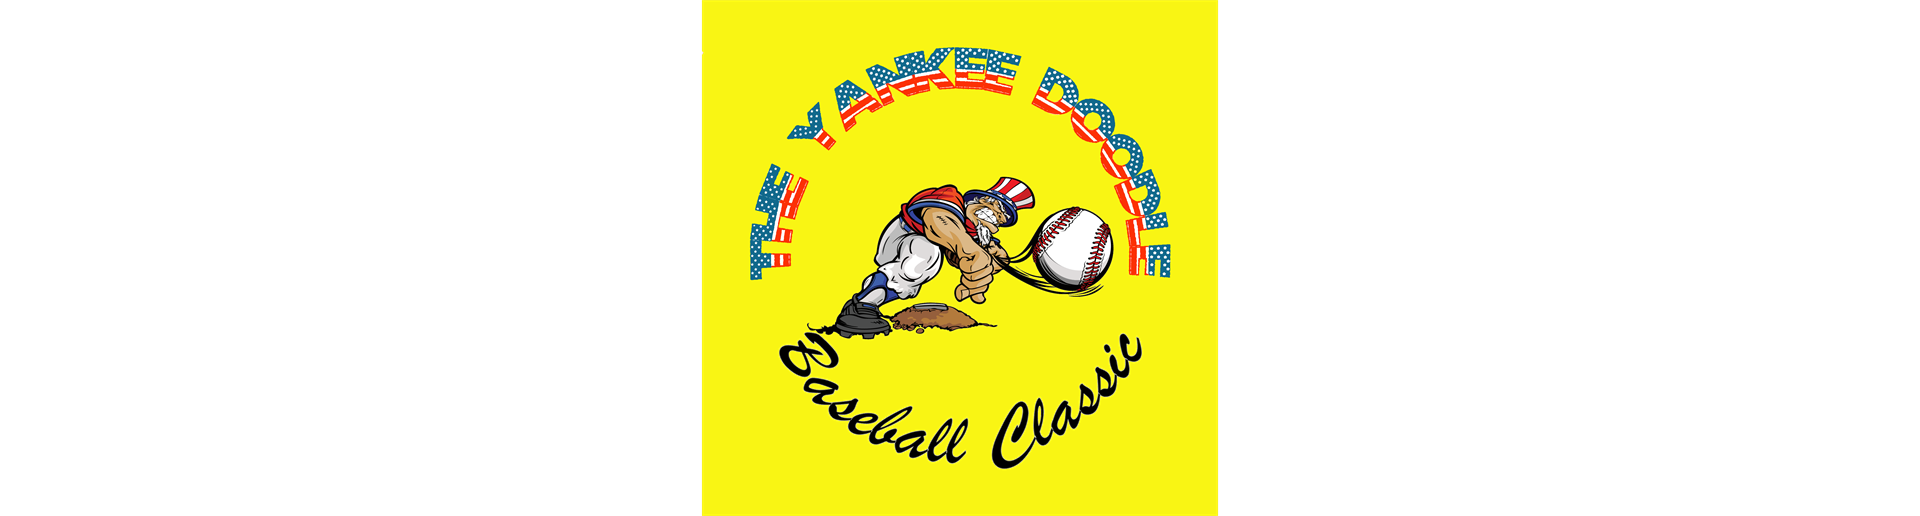 The Yankee Doodle Baseball Classic